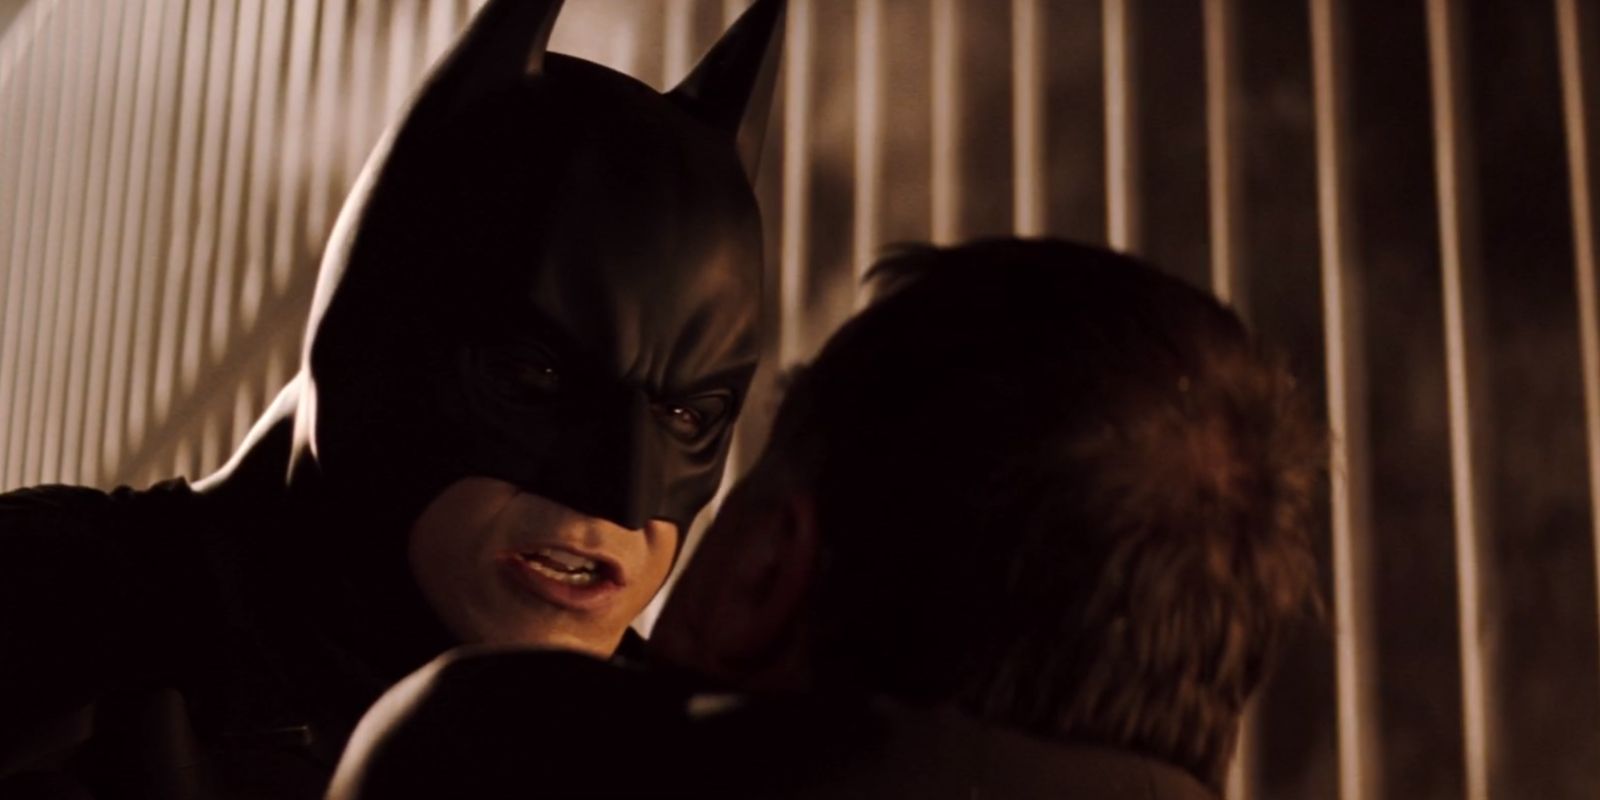 The Dark Knight Trilogy 10 Ways Christian Bale Was The Perfect Batman